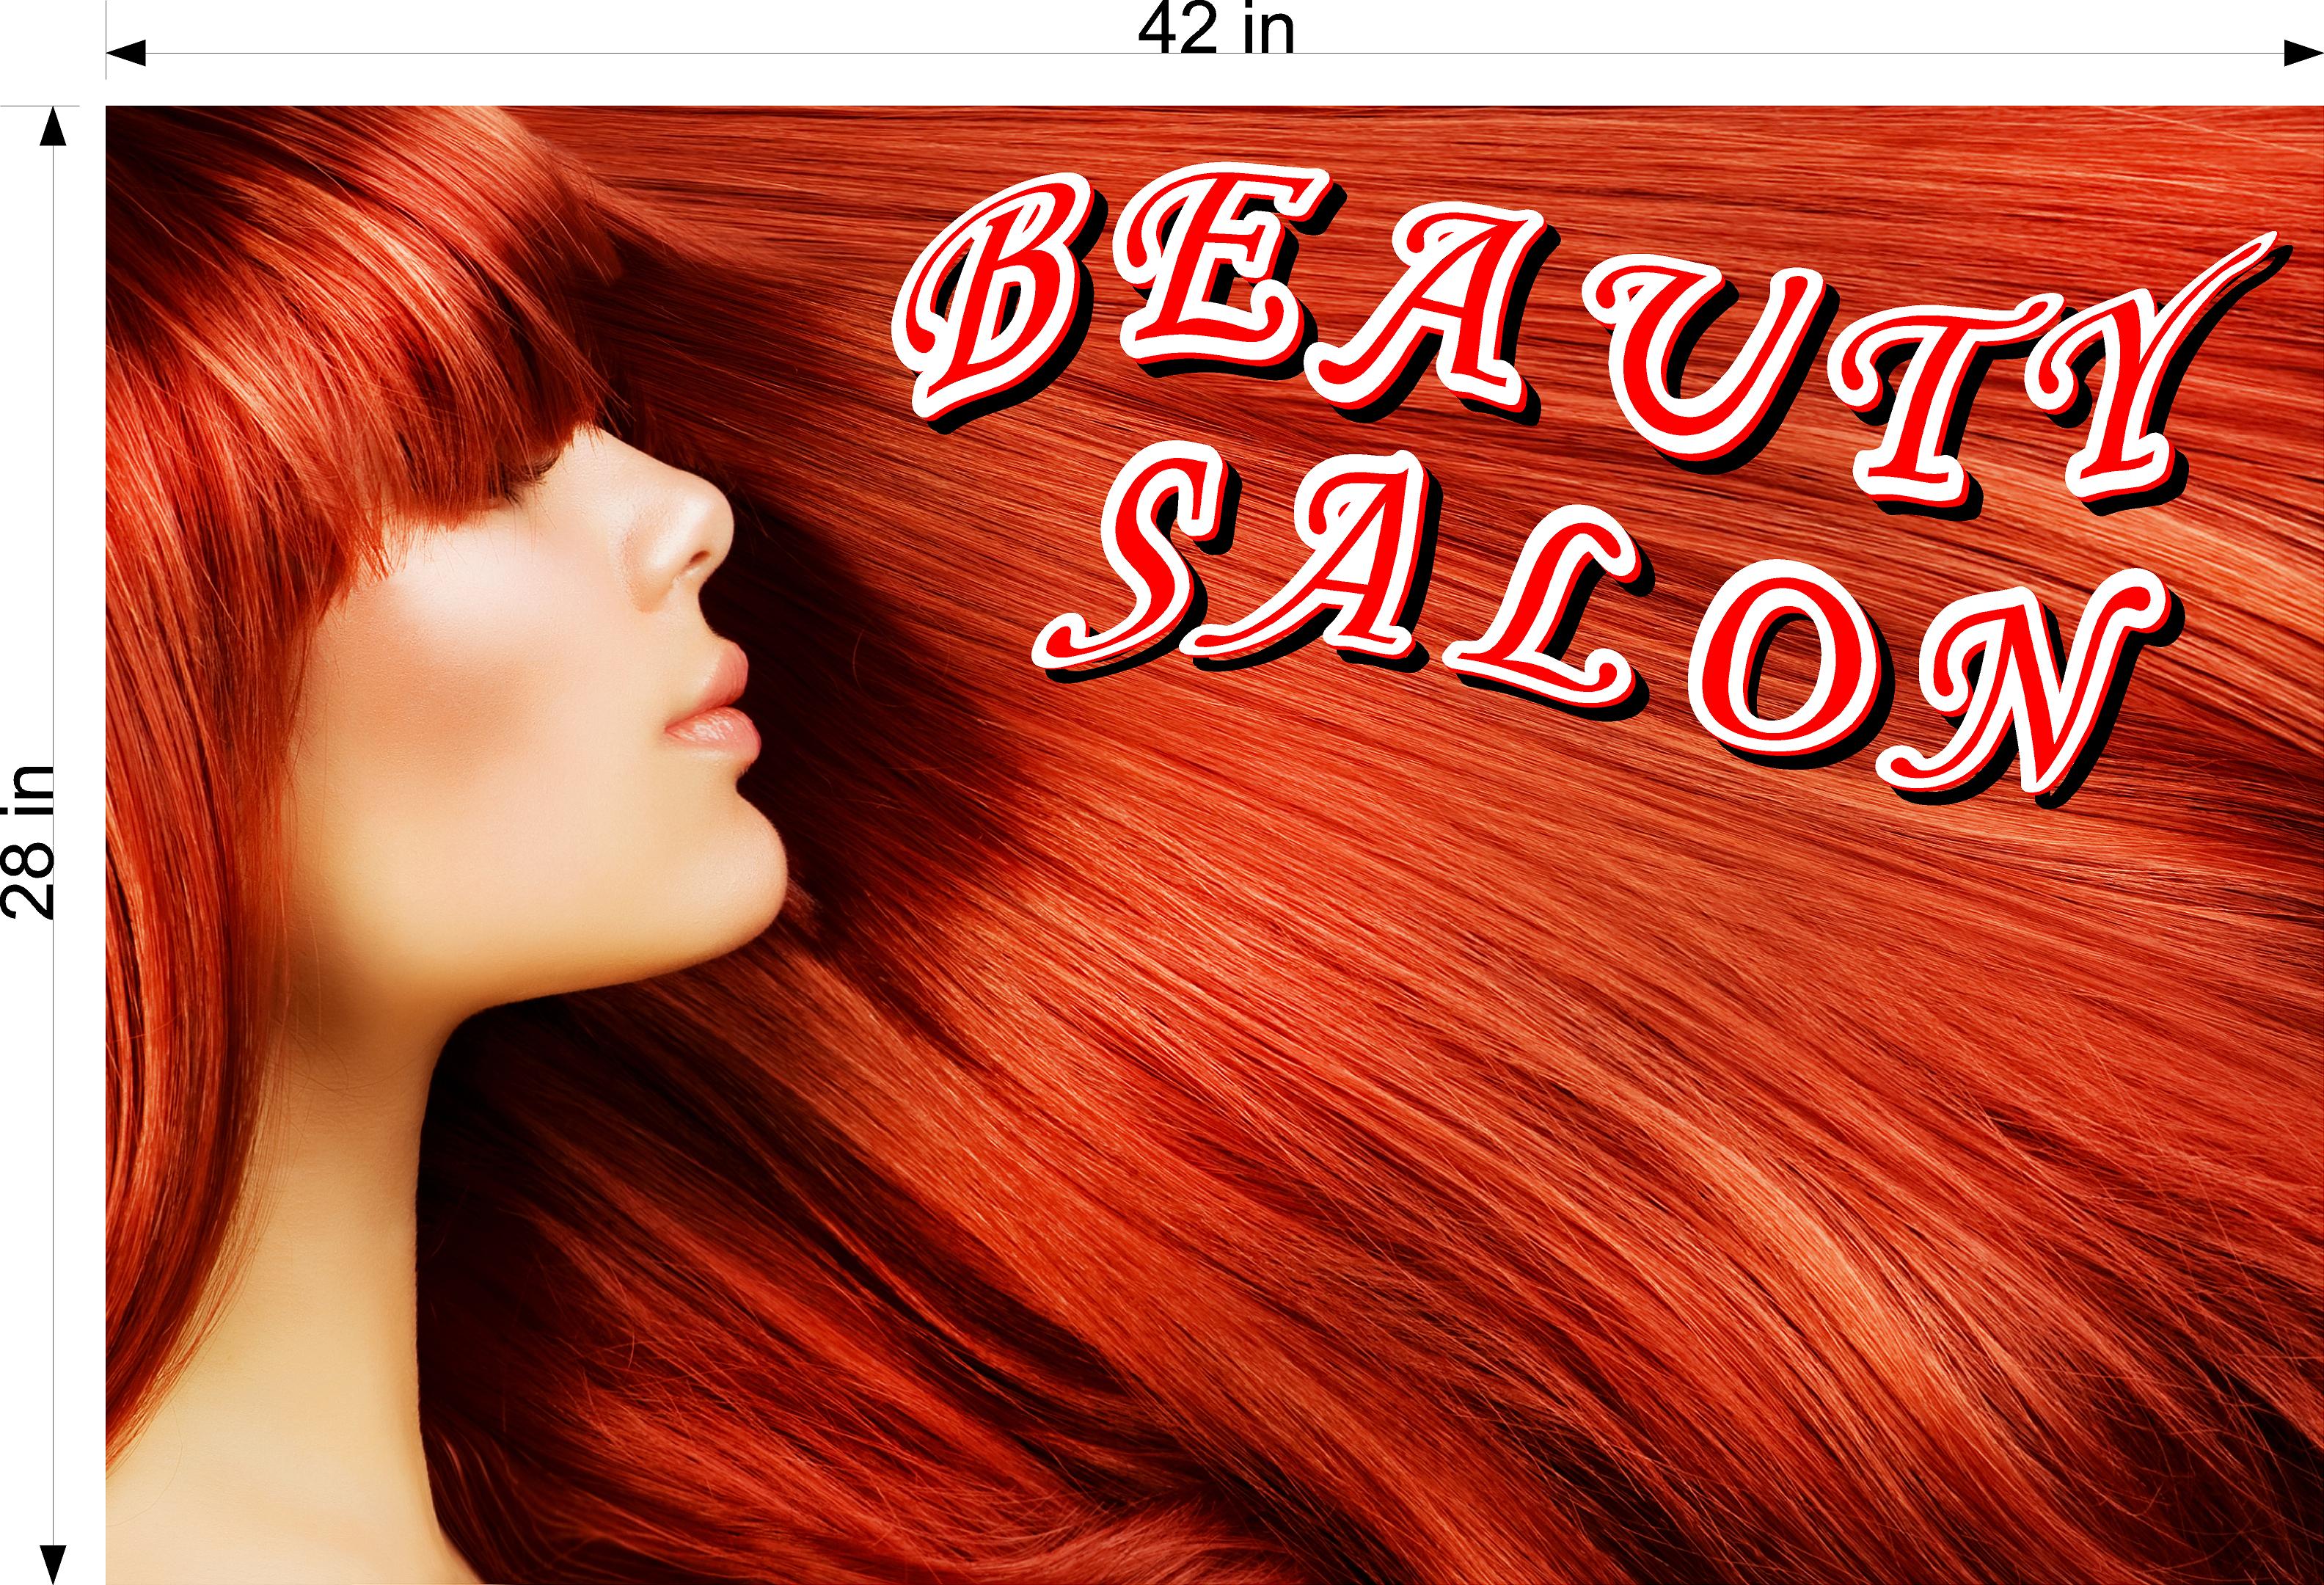 Hair Salon 09 Wallpaper Poster Decal with Adhesive Backing Wall Indoors Interior Horizontal